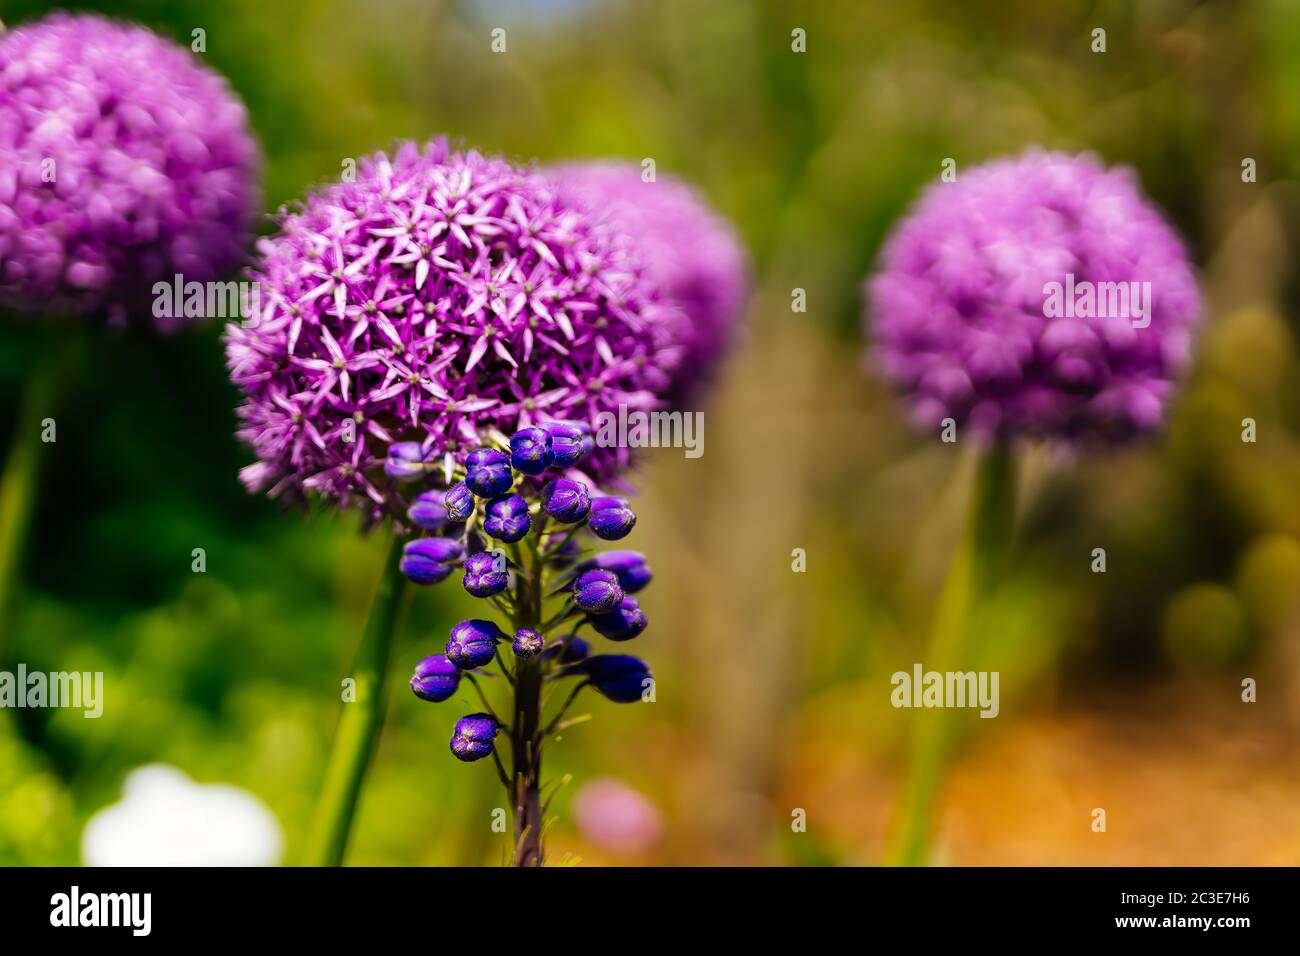 TÌNH YÊU CÂY CỎ ĐV 9 - Page 9 Blooming-allium-vienale-and-grape-hyacinth-flowers-on-colourful-blurred-background-2C3E7H6